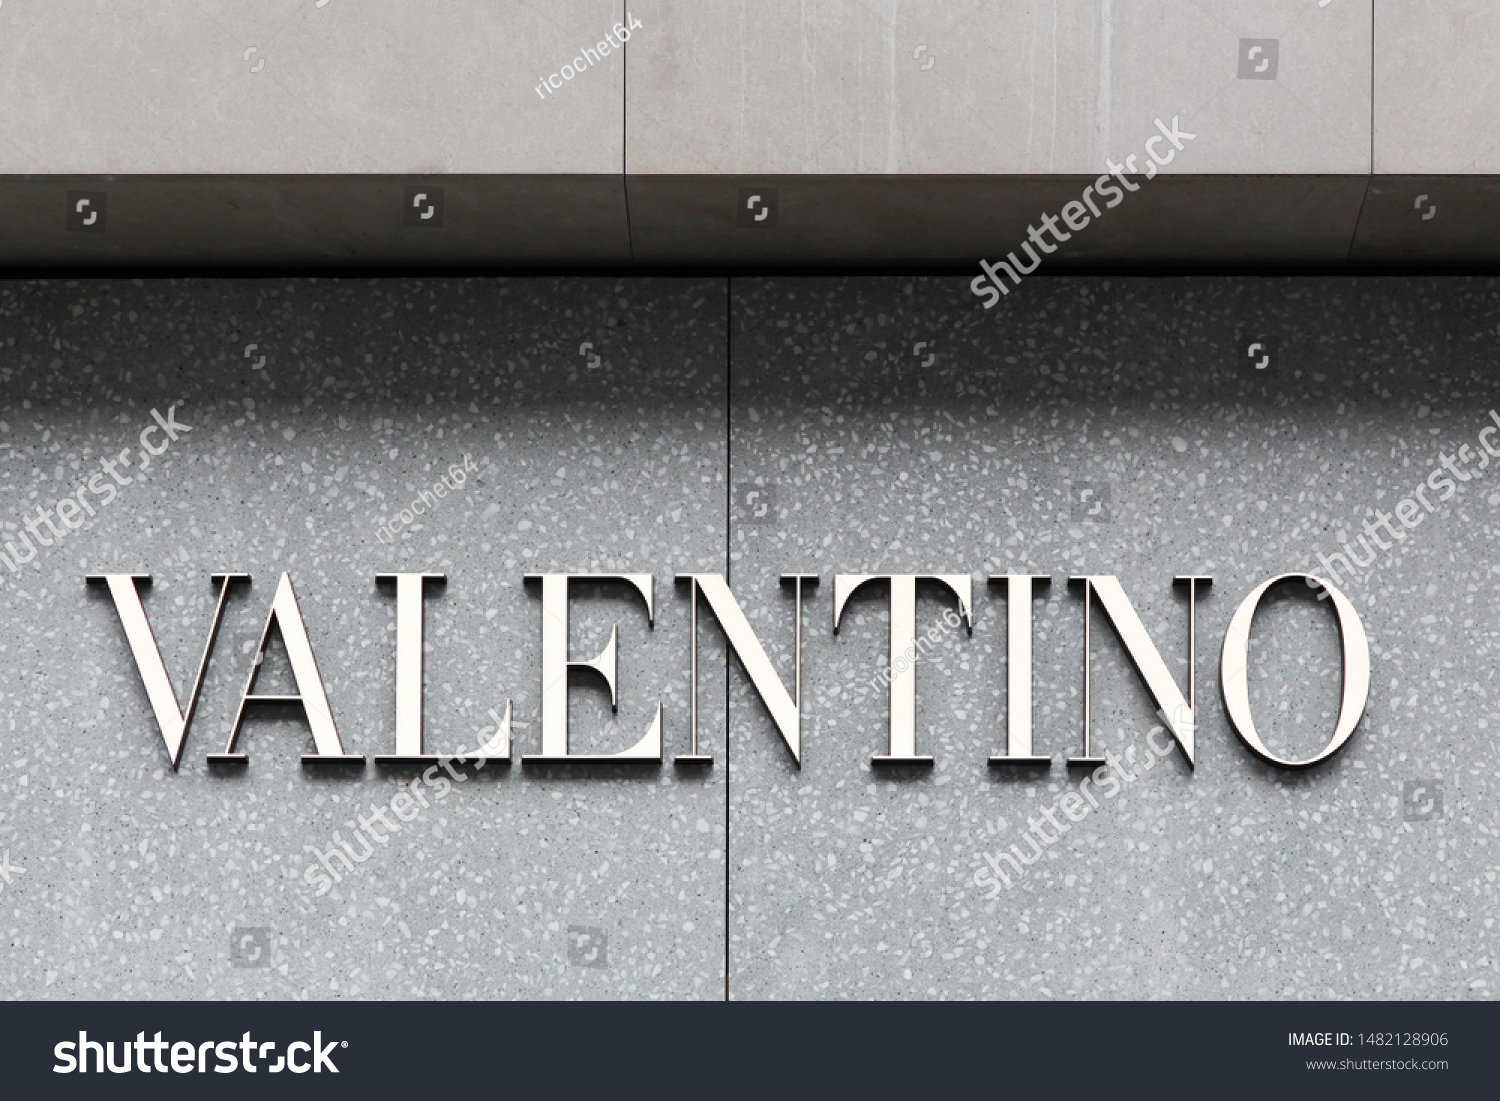 207 Valentino garavani Images, Stock Photos & Vectors | Shutterstock